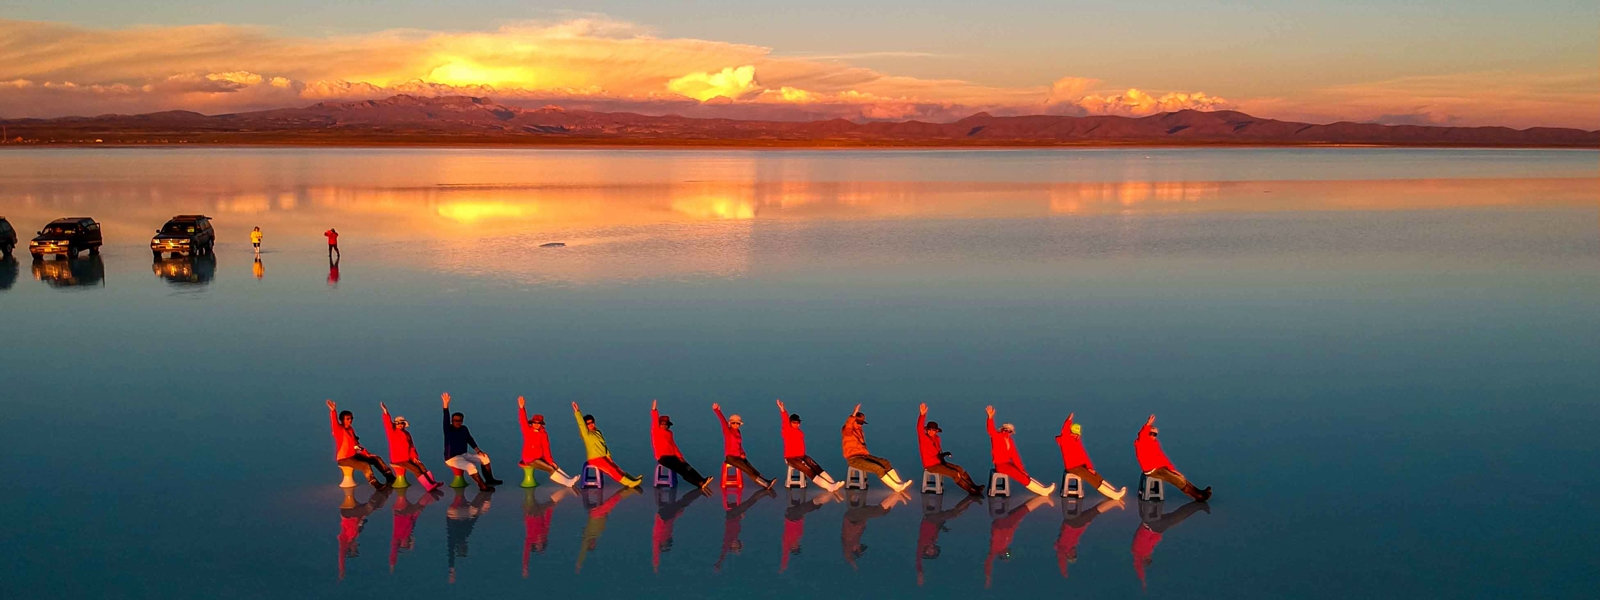 Tourists enjoying a 4 day Salar de Uyuni experience in Bolivia